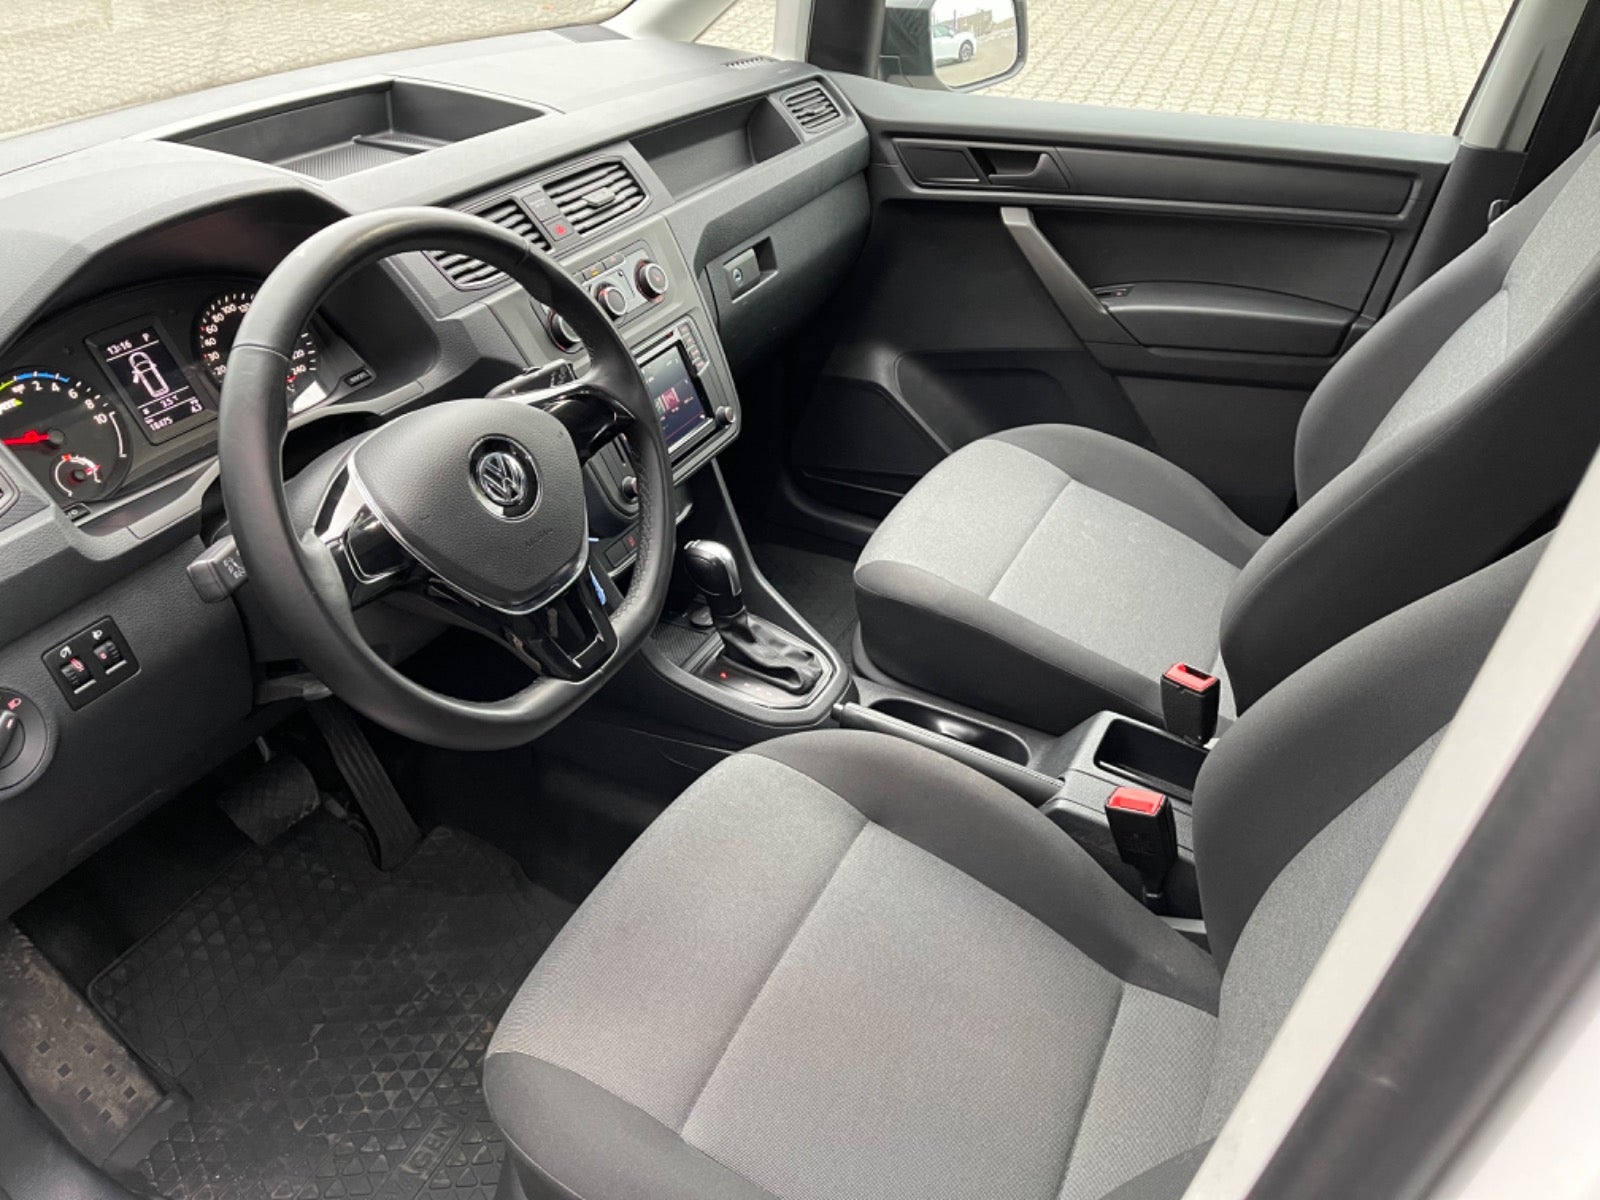 VW e-Caddy 2020